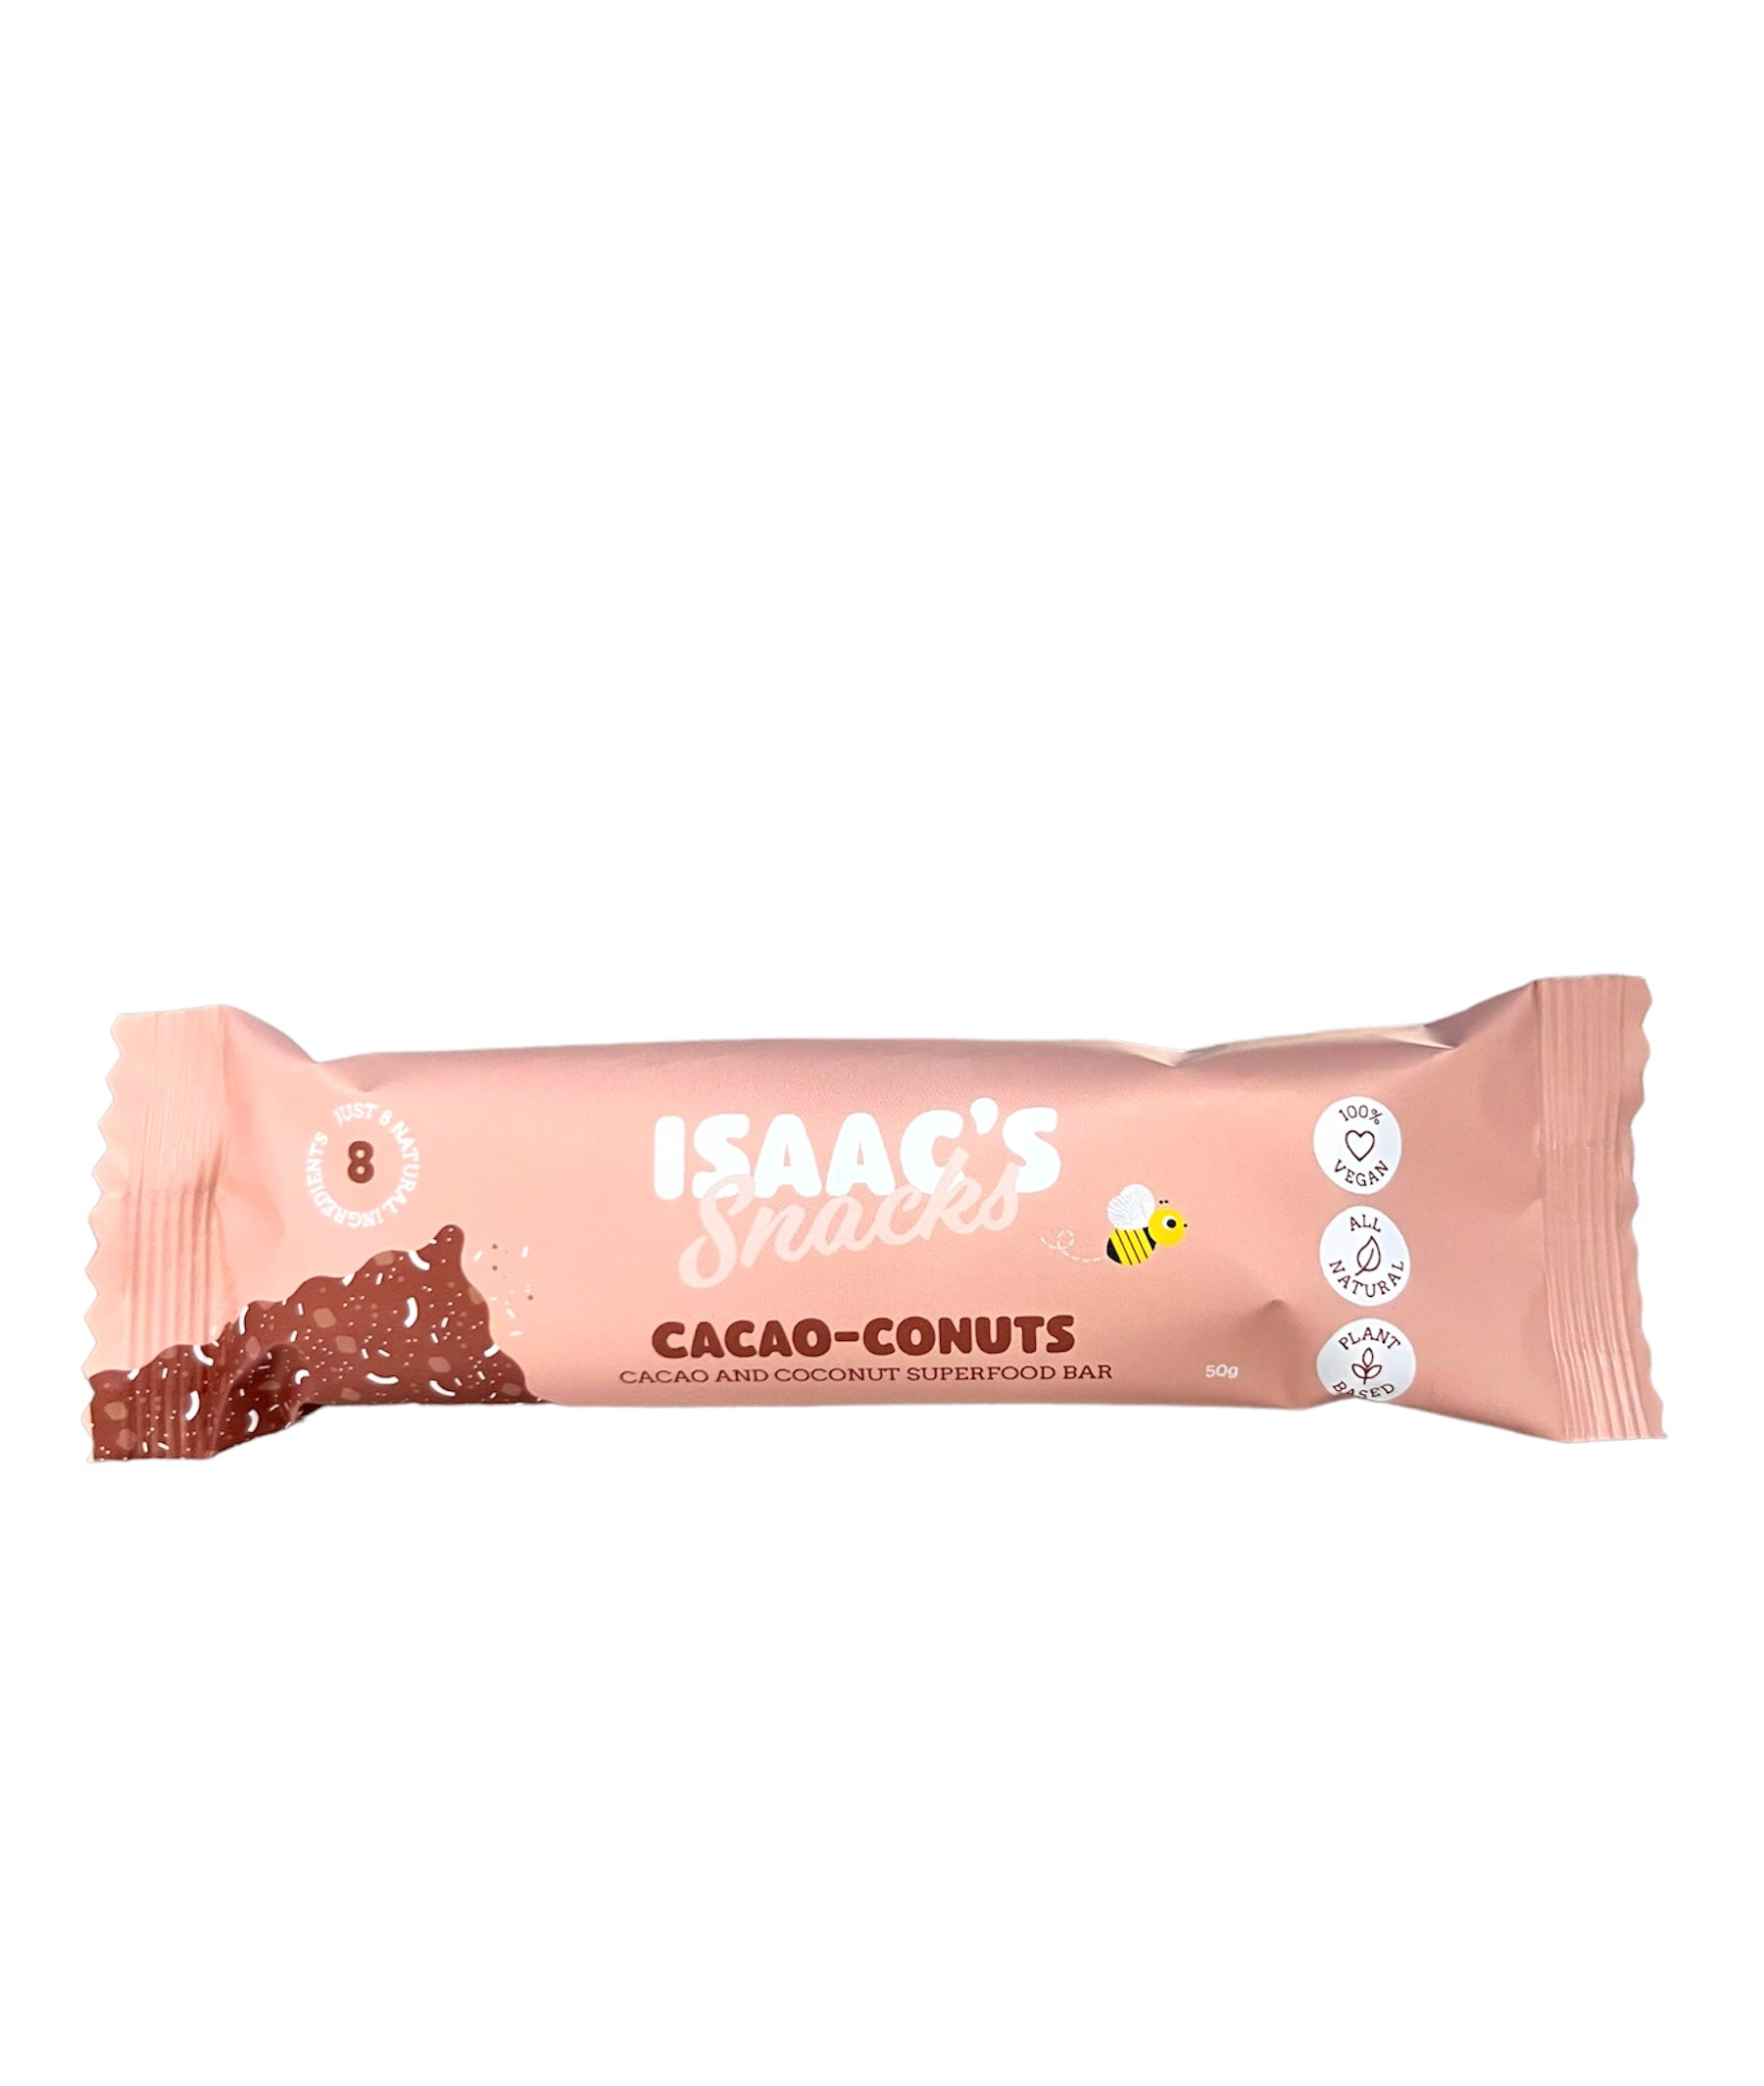 NEW Isaac's Snacks Cacao-Conuts Bar 50g